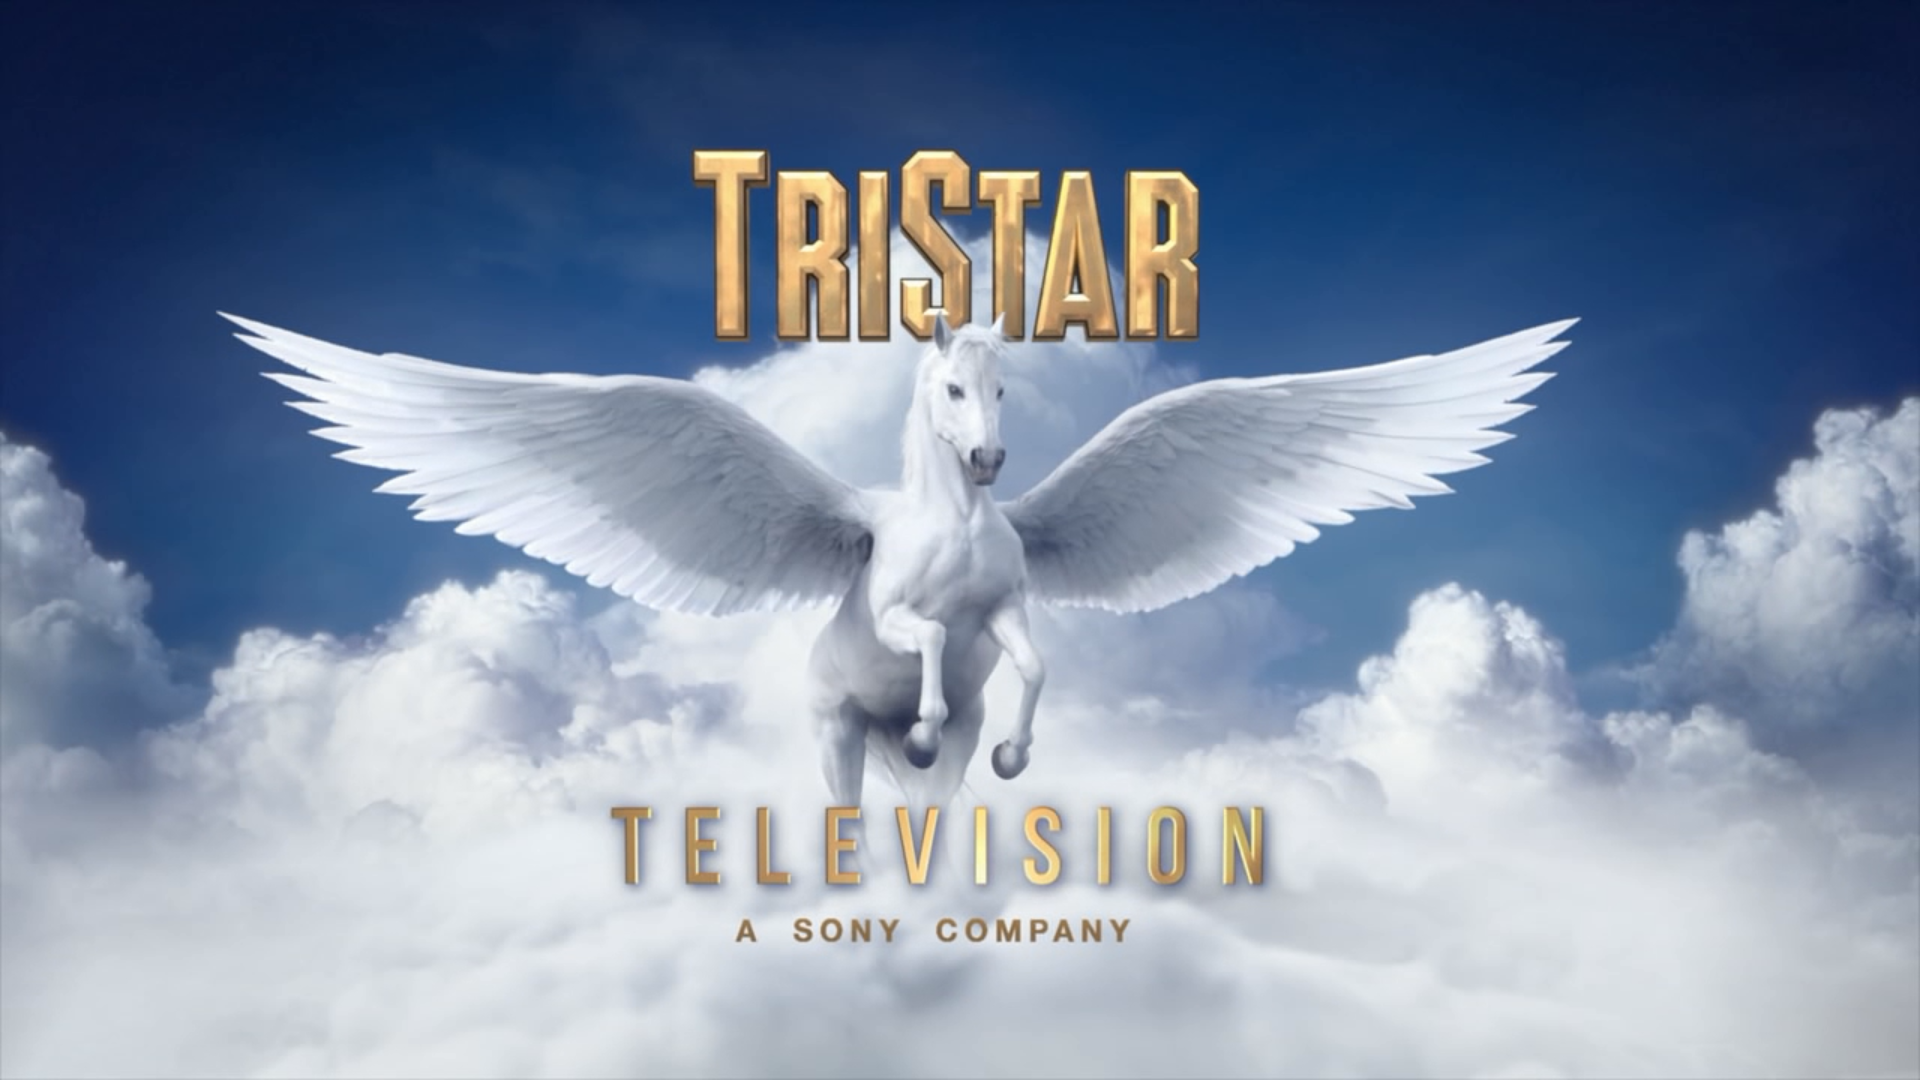 TriStar Television (2015)